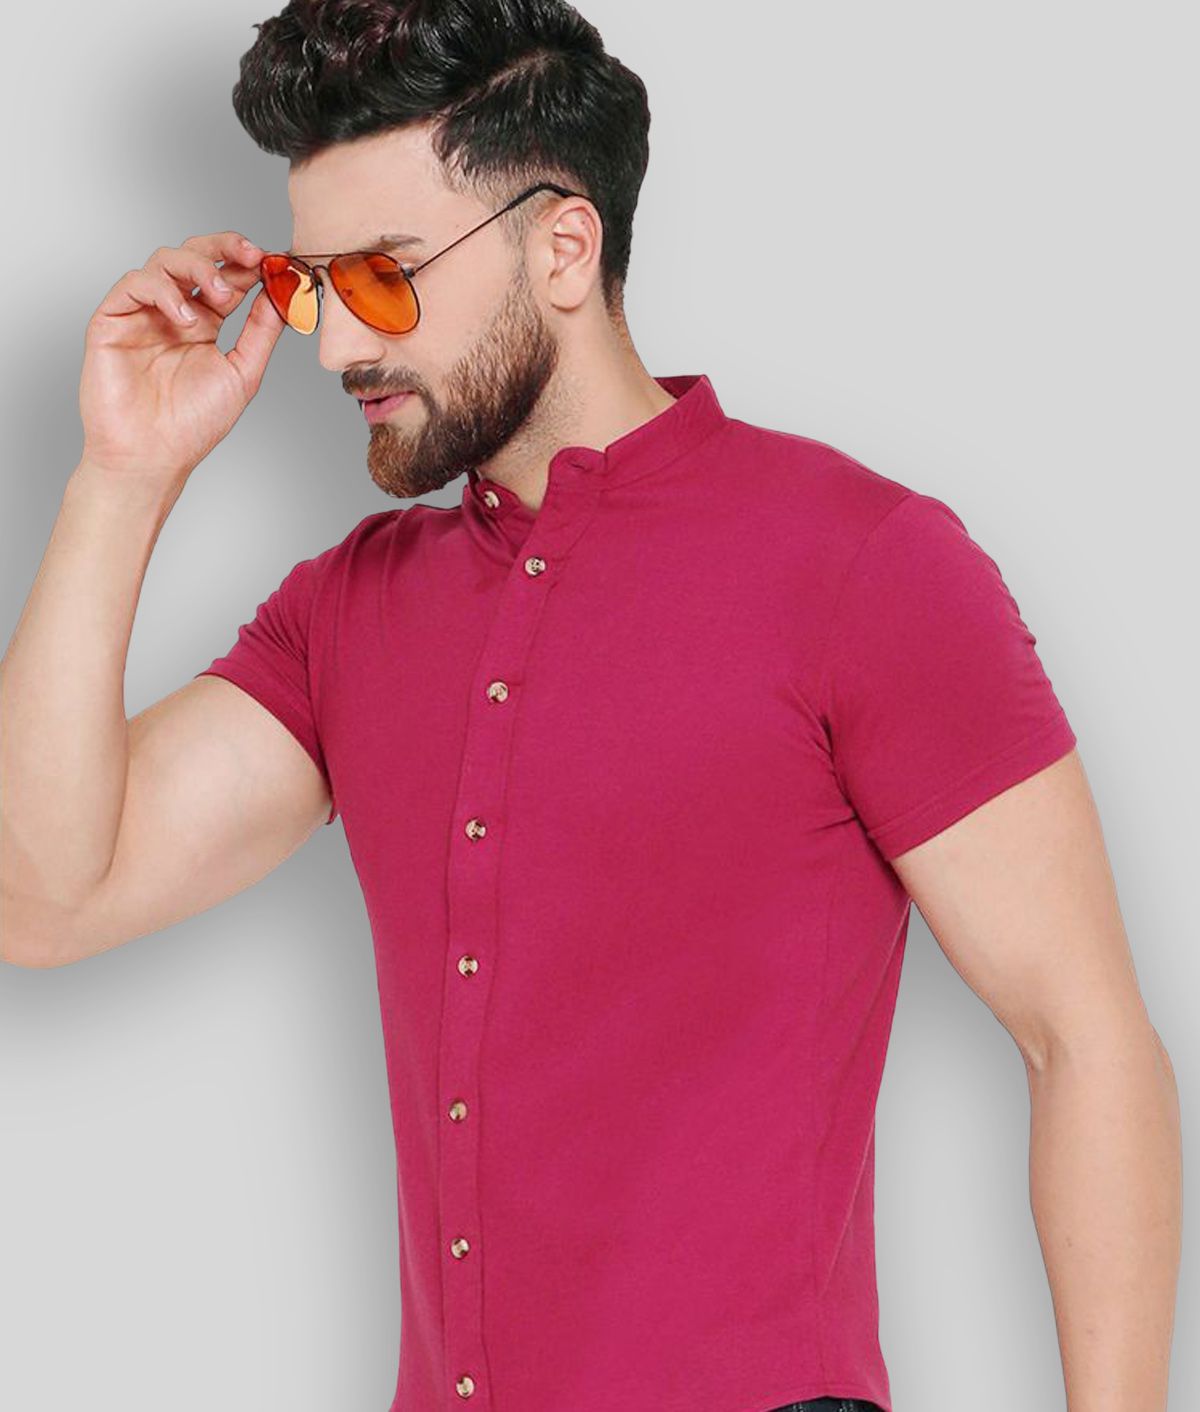 GESPO - Pink Cotton Blend Regular Fit Men's Casual Shirt (Pack of 1)